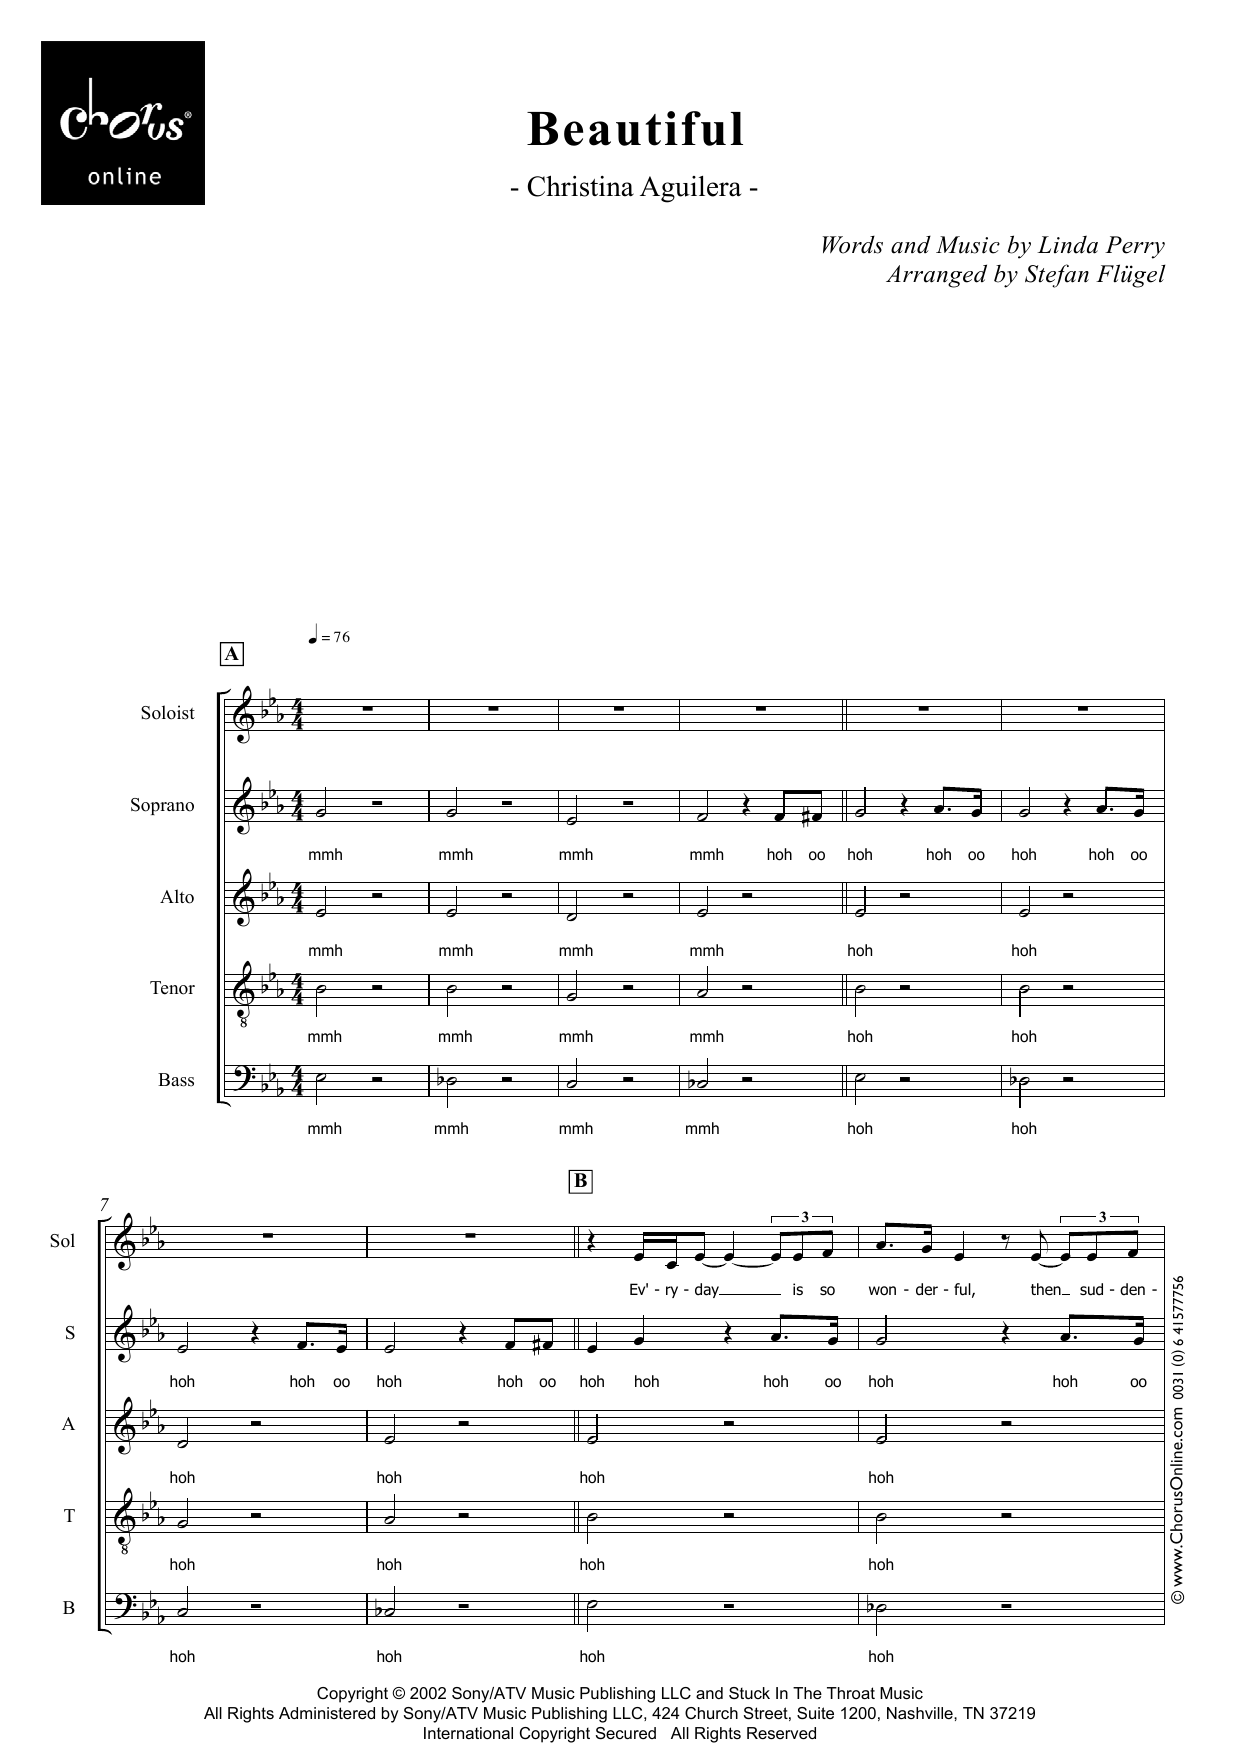 Christina Aguilera Beautiful (arr. Stefan Flügel) sheet music notes printable PDF score